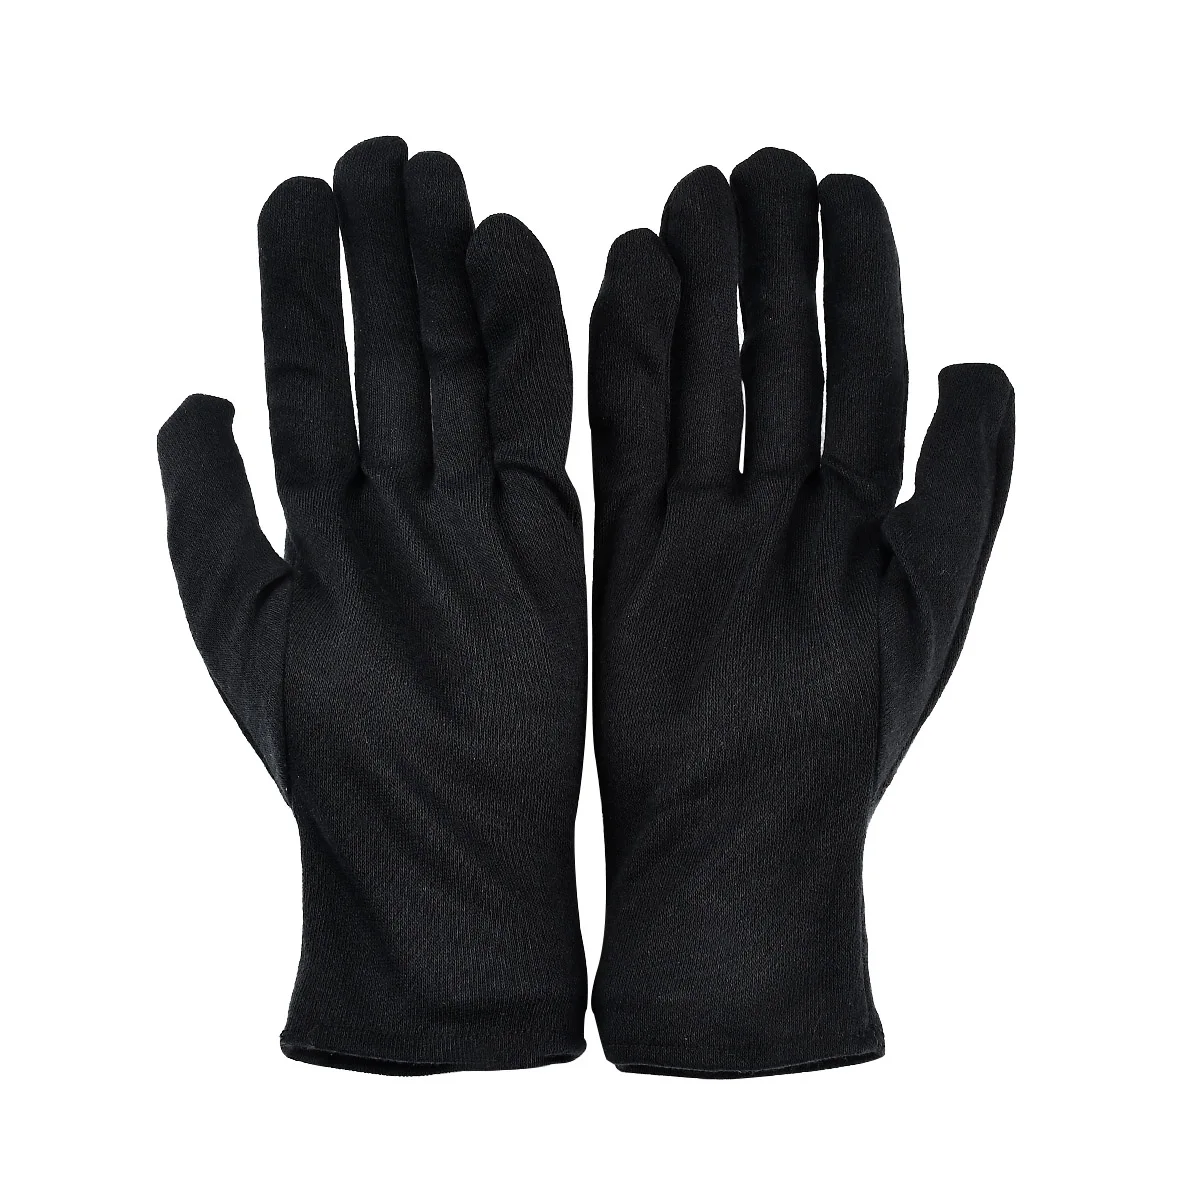 Black White Gloves, Black White Glove Pair